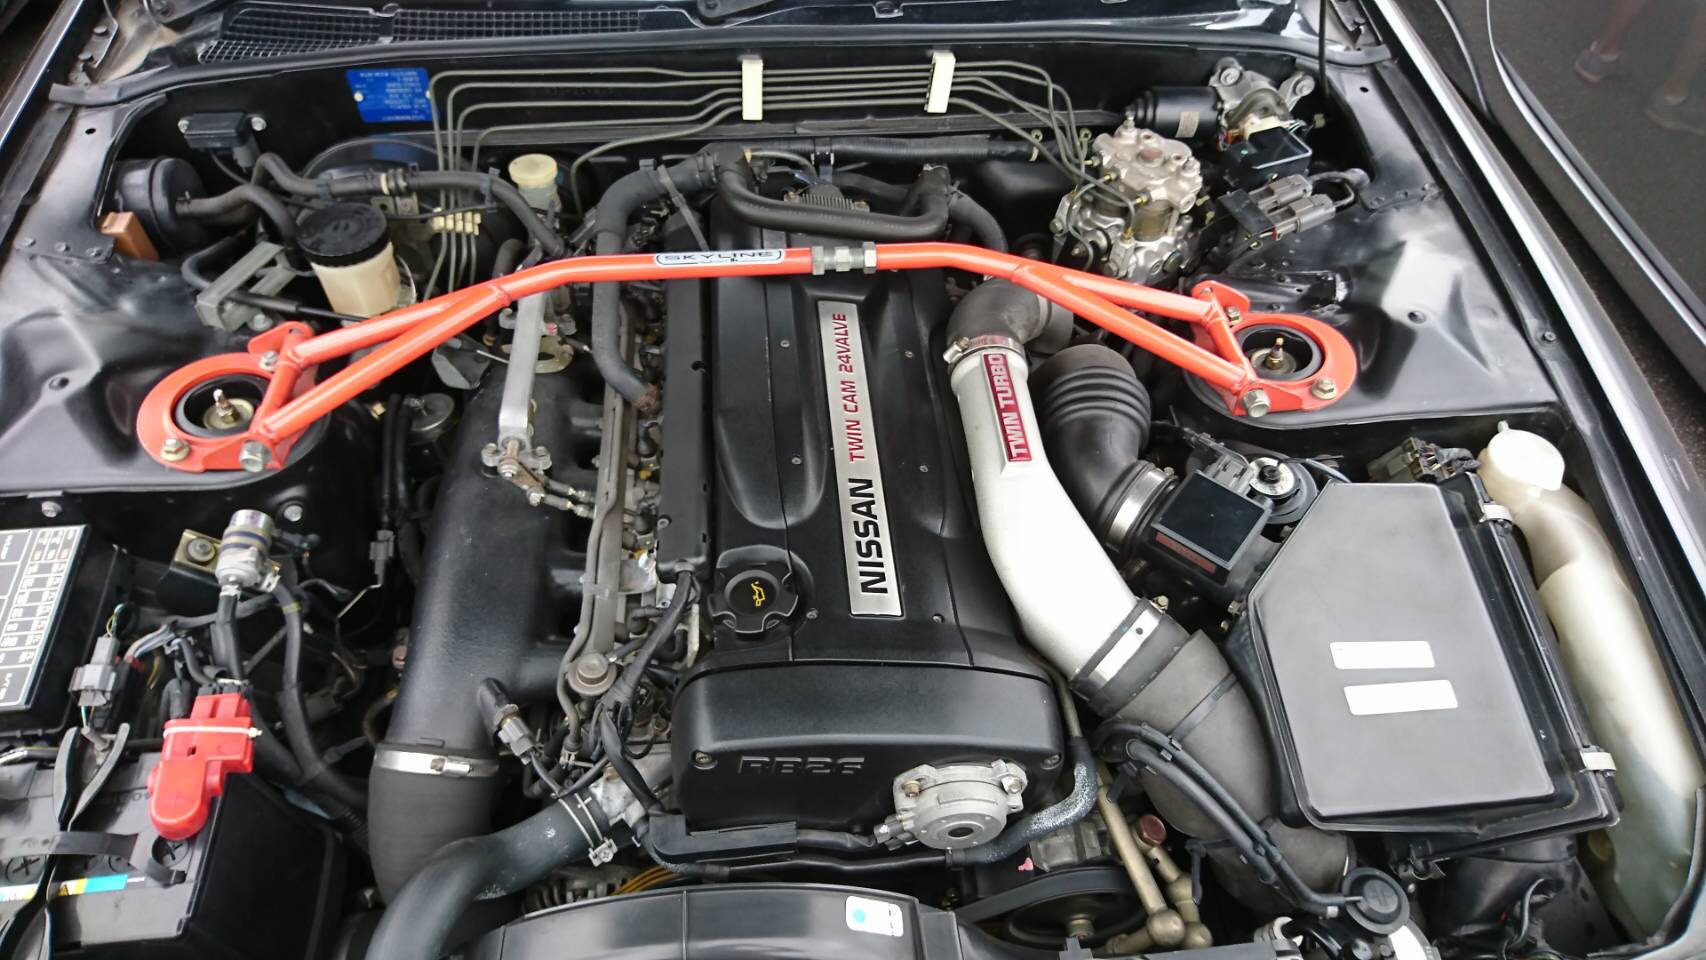 Мотор сток. Nissan Skyline r32 мотор. Nissan Skyline GTR r32 двигатель. Nissan Skyline r32 GTR подкапотка. Двигатель Nissan GTR 32.